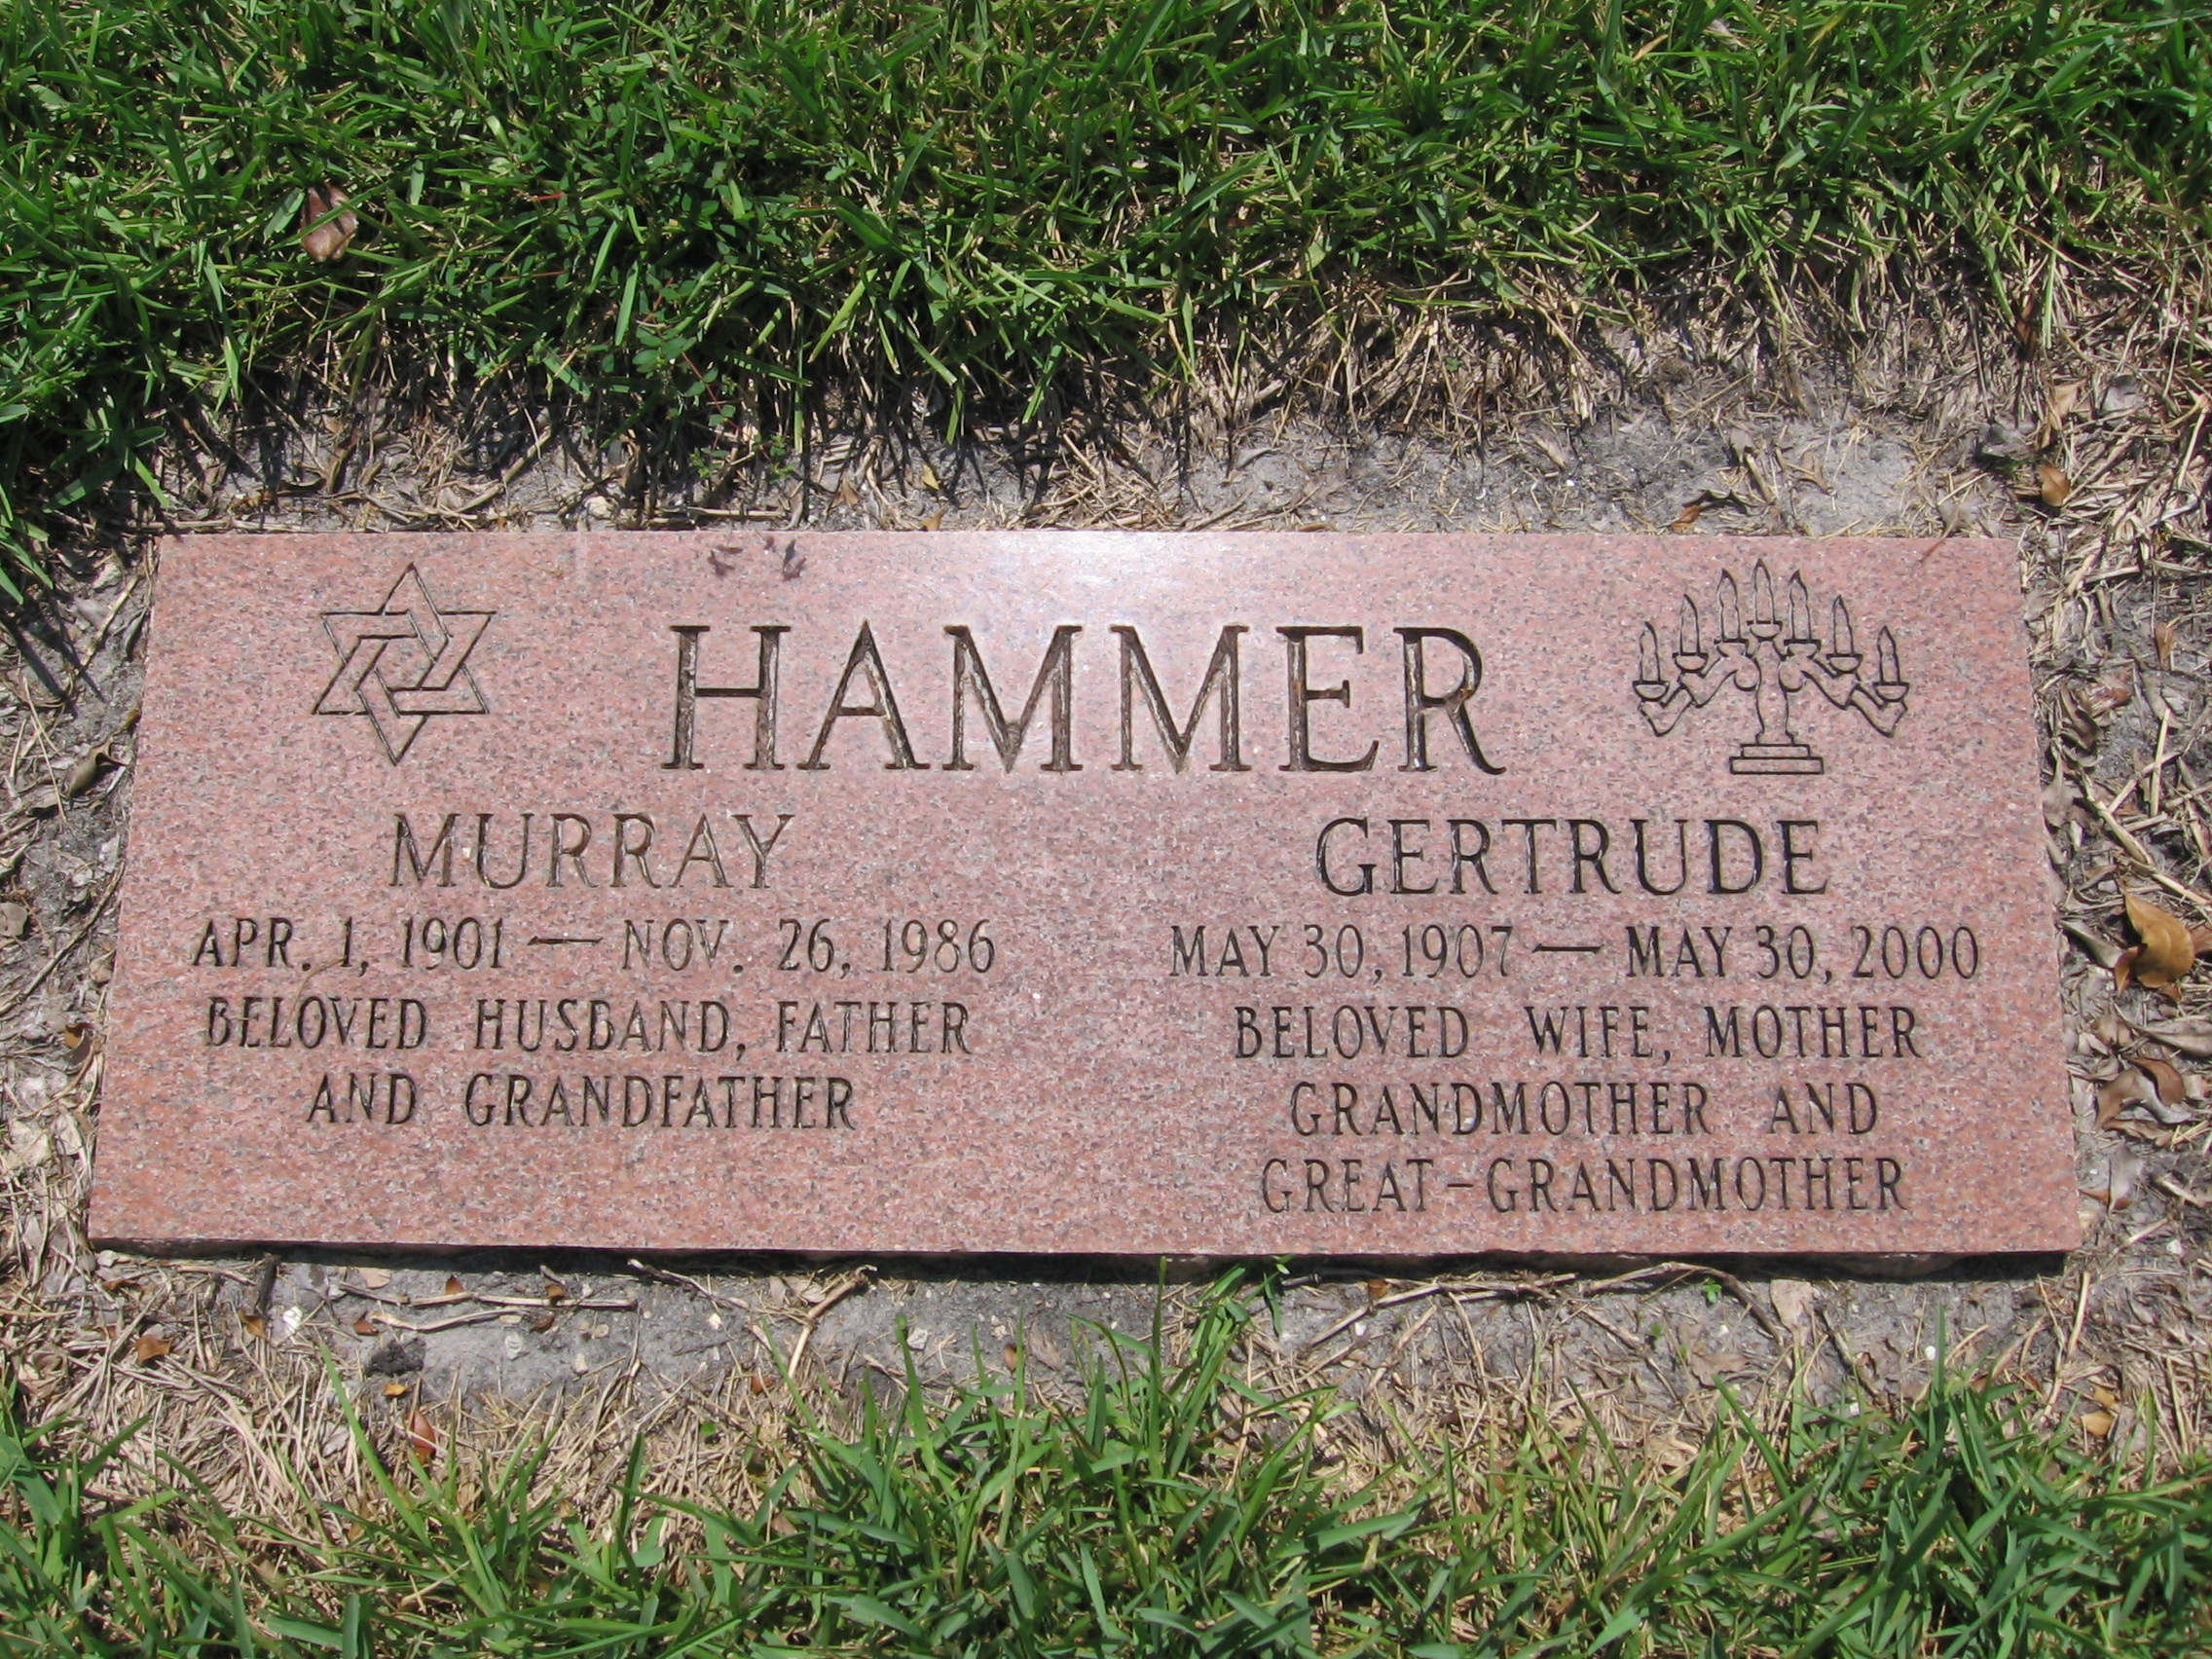 Murray Hammer